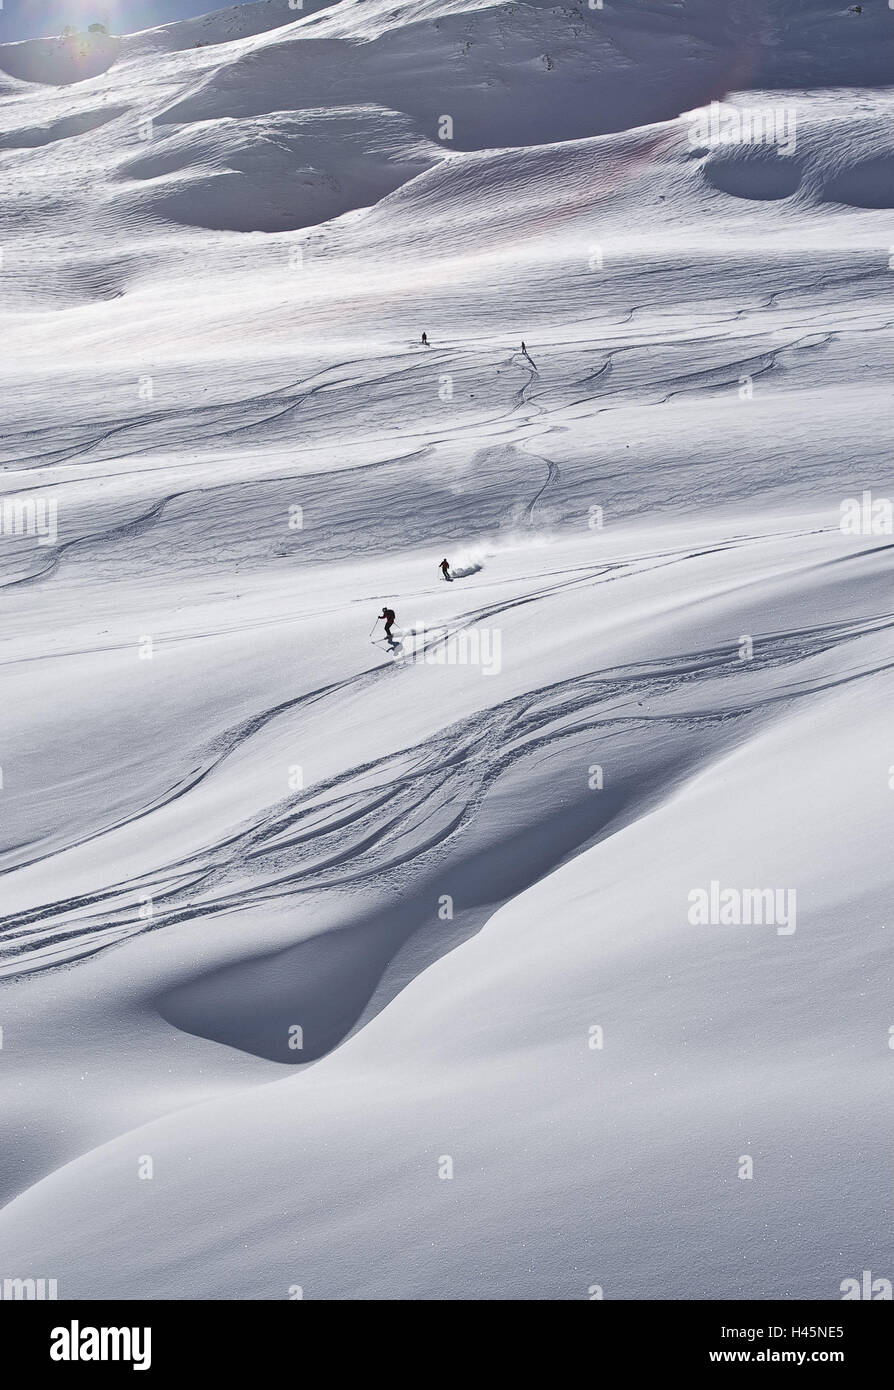 Austria, Vorarlberg, inclination, deep snow, skier, person, sport, winter sports, skiing, skiing, snow, runway, tracks, Freeride, ski areas, tracks, white, Stock Photo